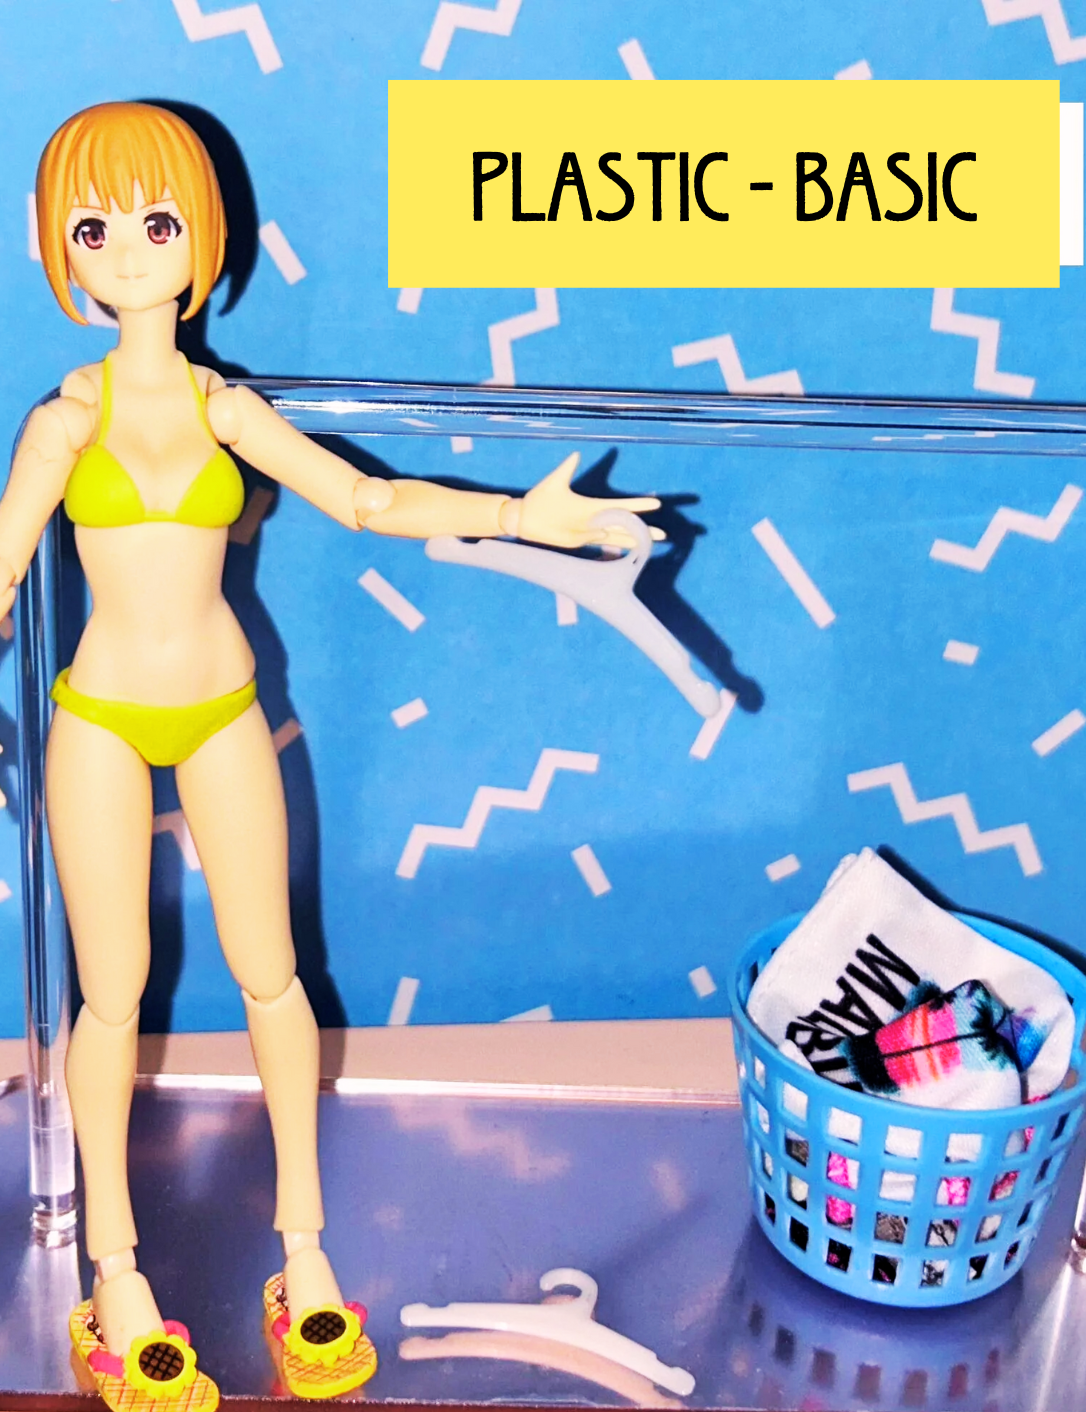 12th Scale Basic Plastic Hanger